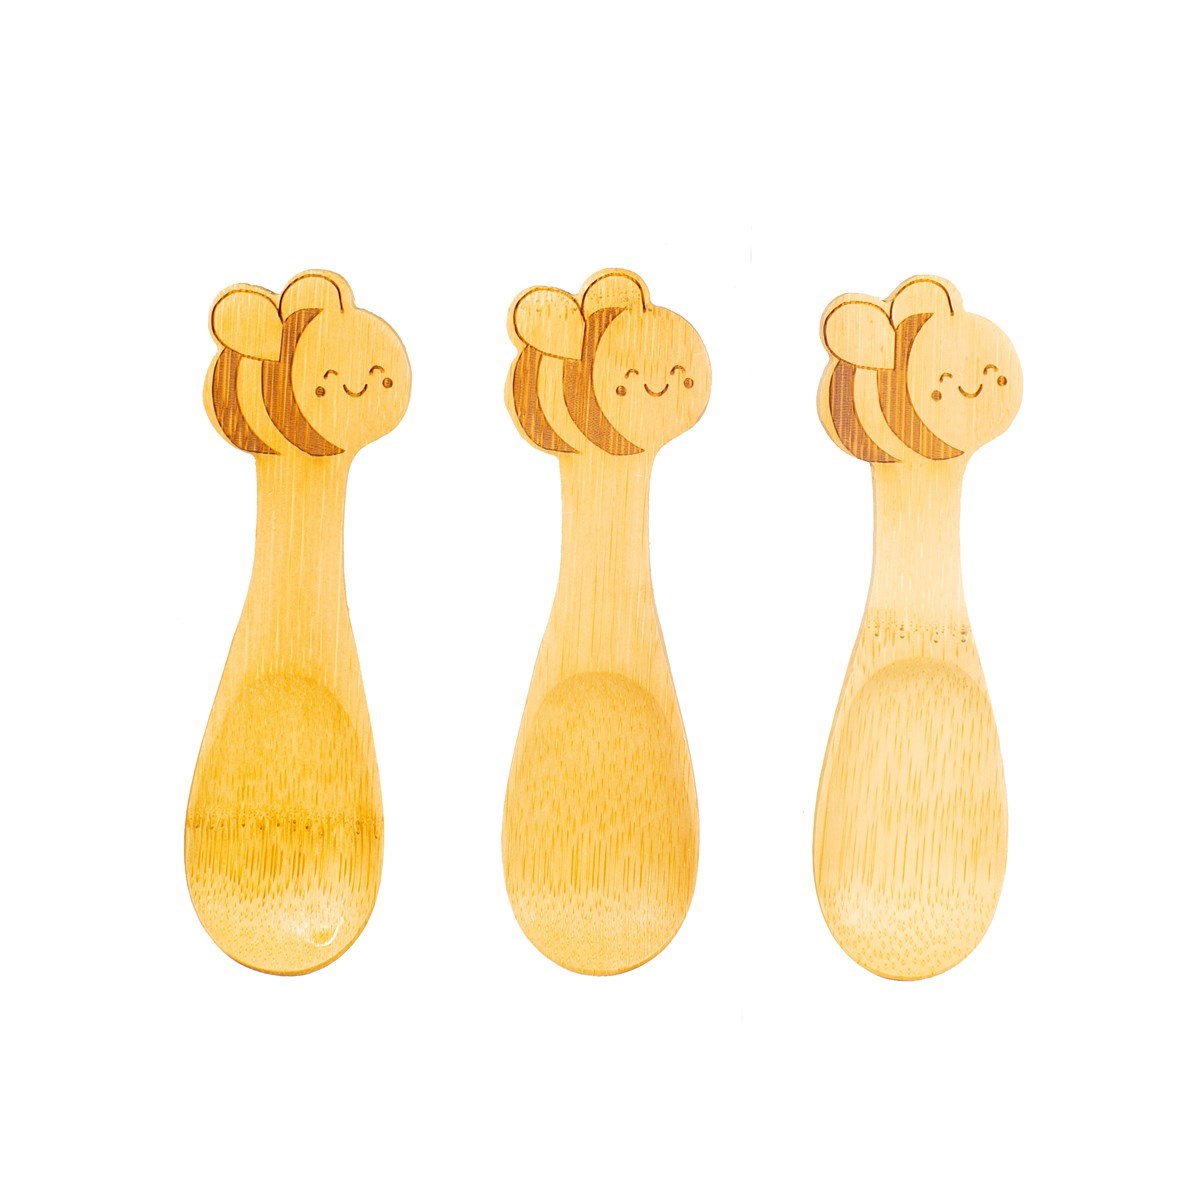 Bumblebee bamboo spoons - set of three